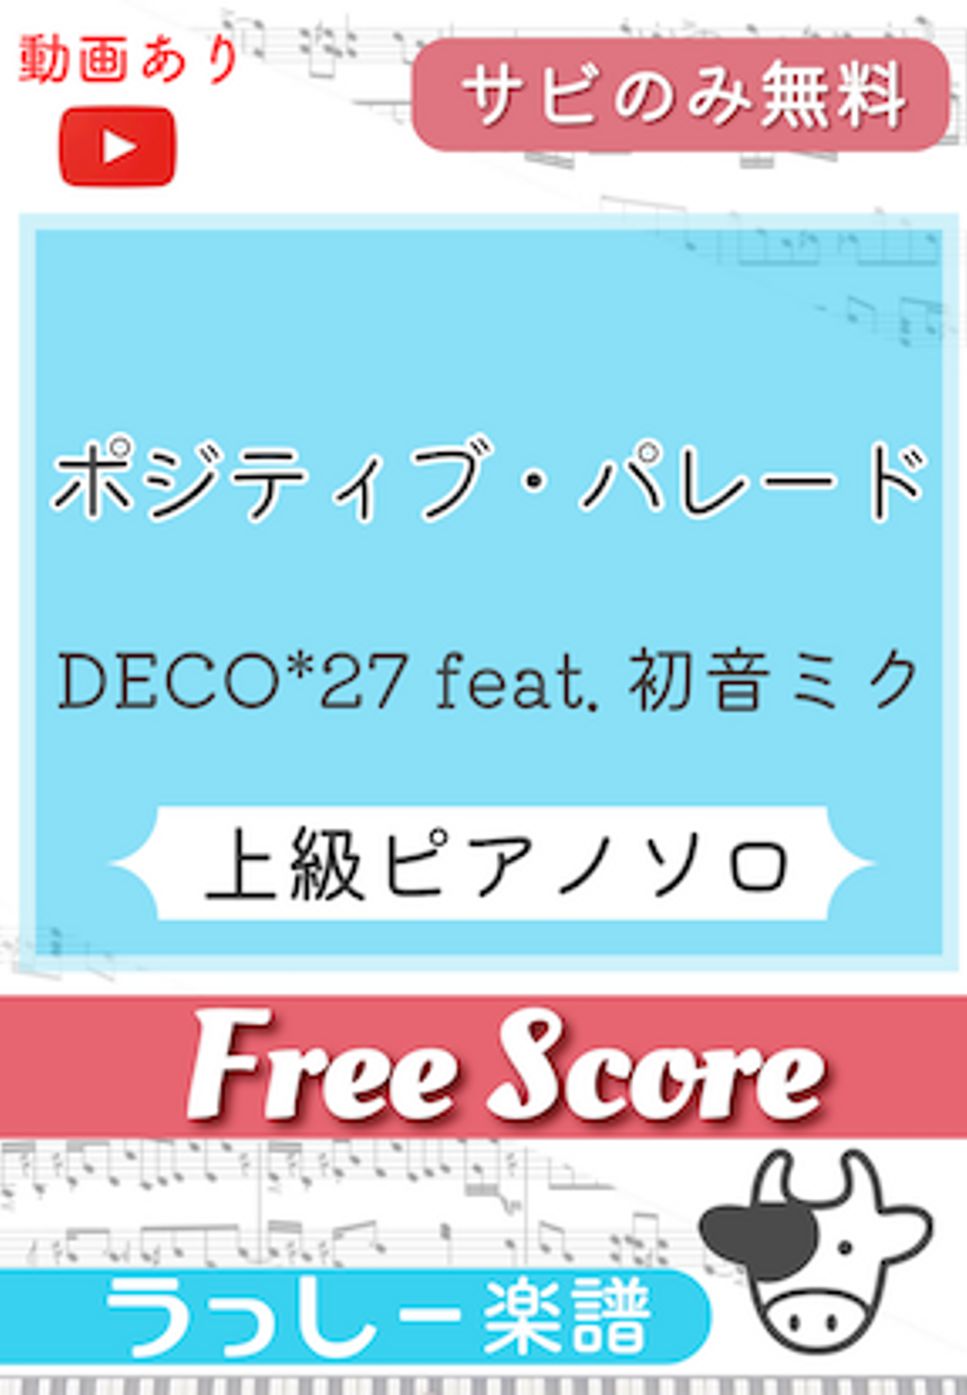 DECO*27 - ポジティブ・パレード (サビのみ無料) by 牛武奏人